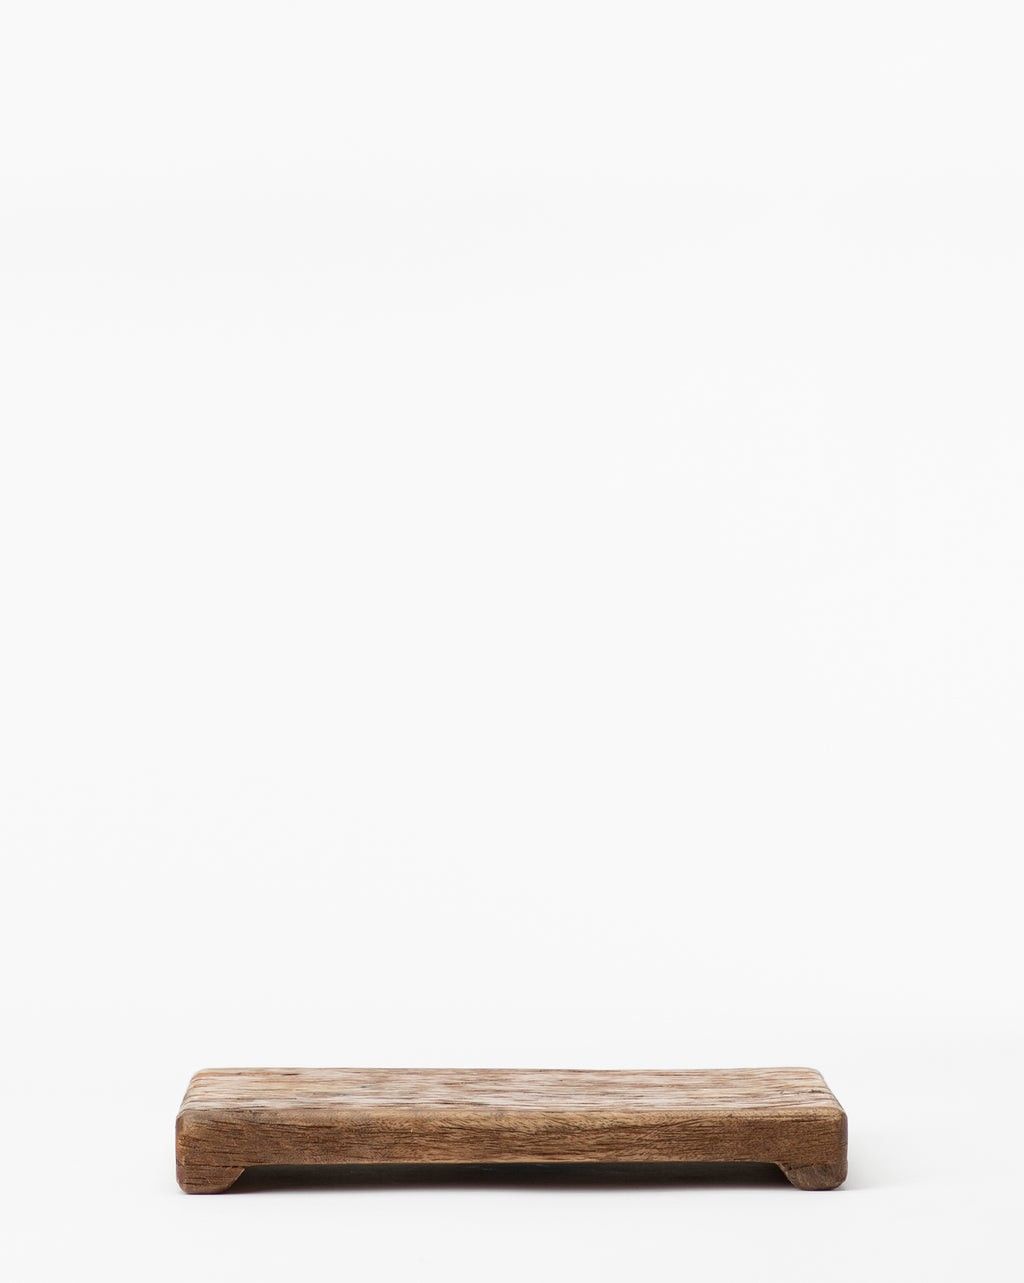 Mango Wood Rectangular Pedestal | McGee & Co.